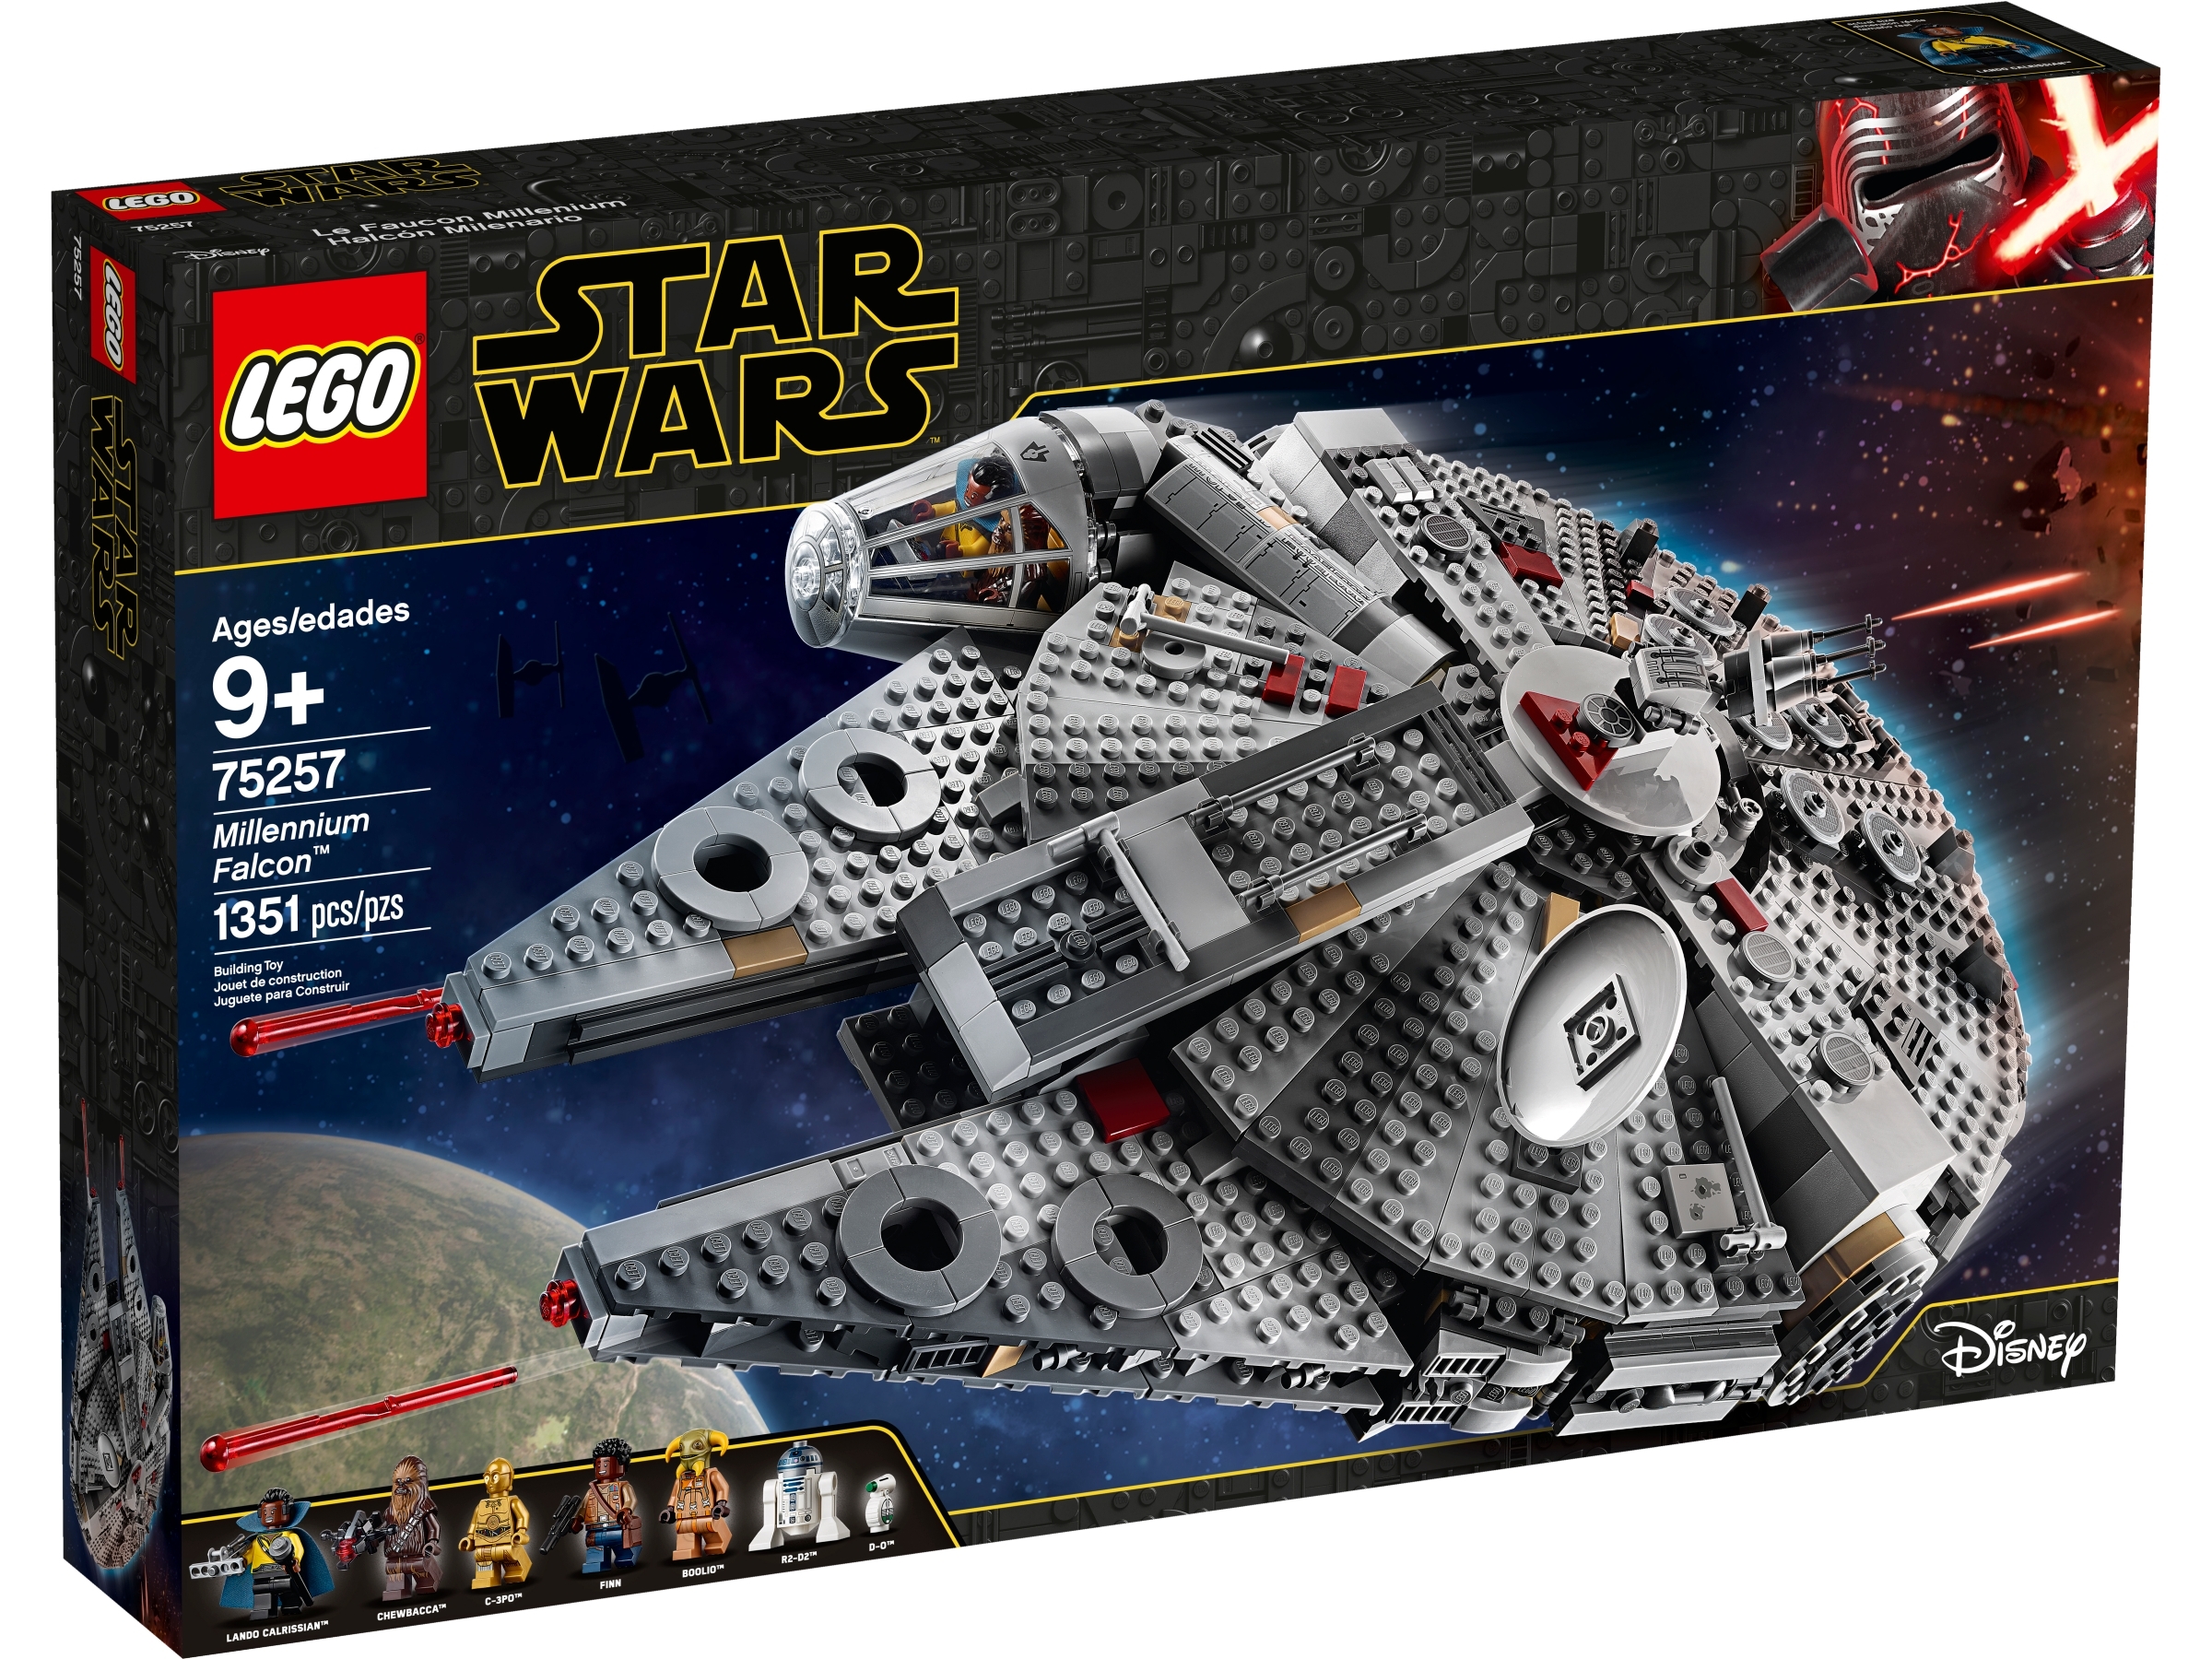 LEGO 30057-1x1 PIASTRA rotonda in viola-nuova x100-Star Wars/Città/Marvel 